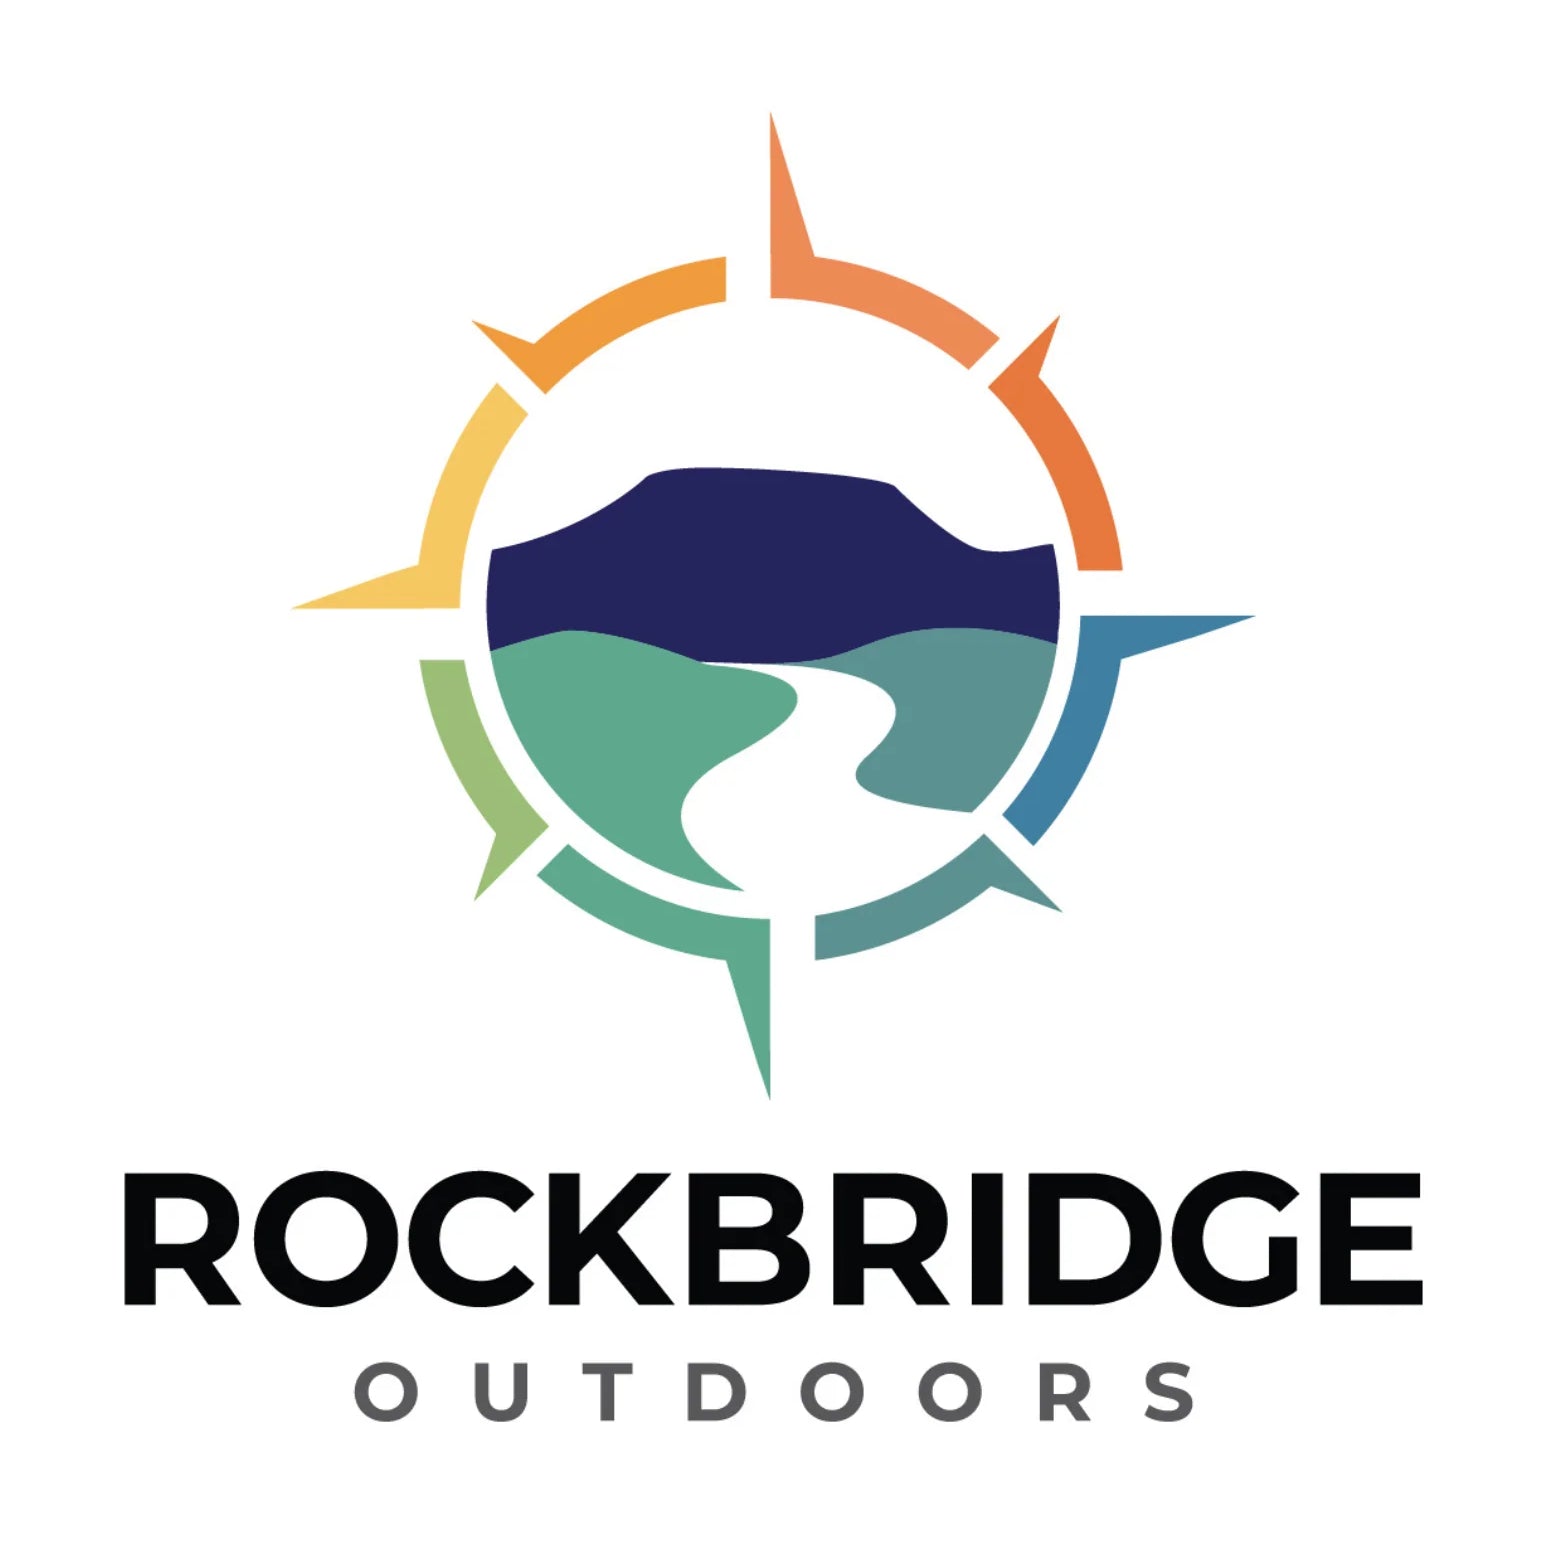 Rockbridge Outdoors